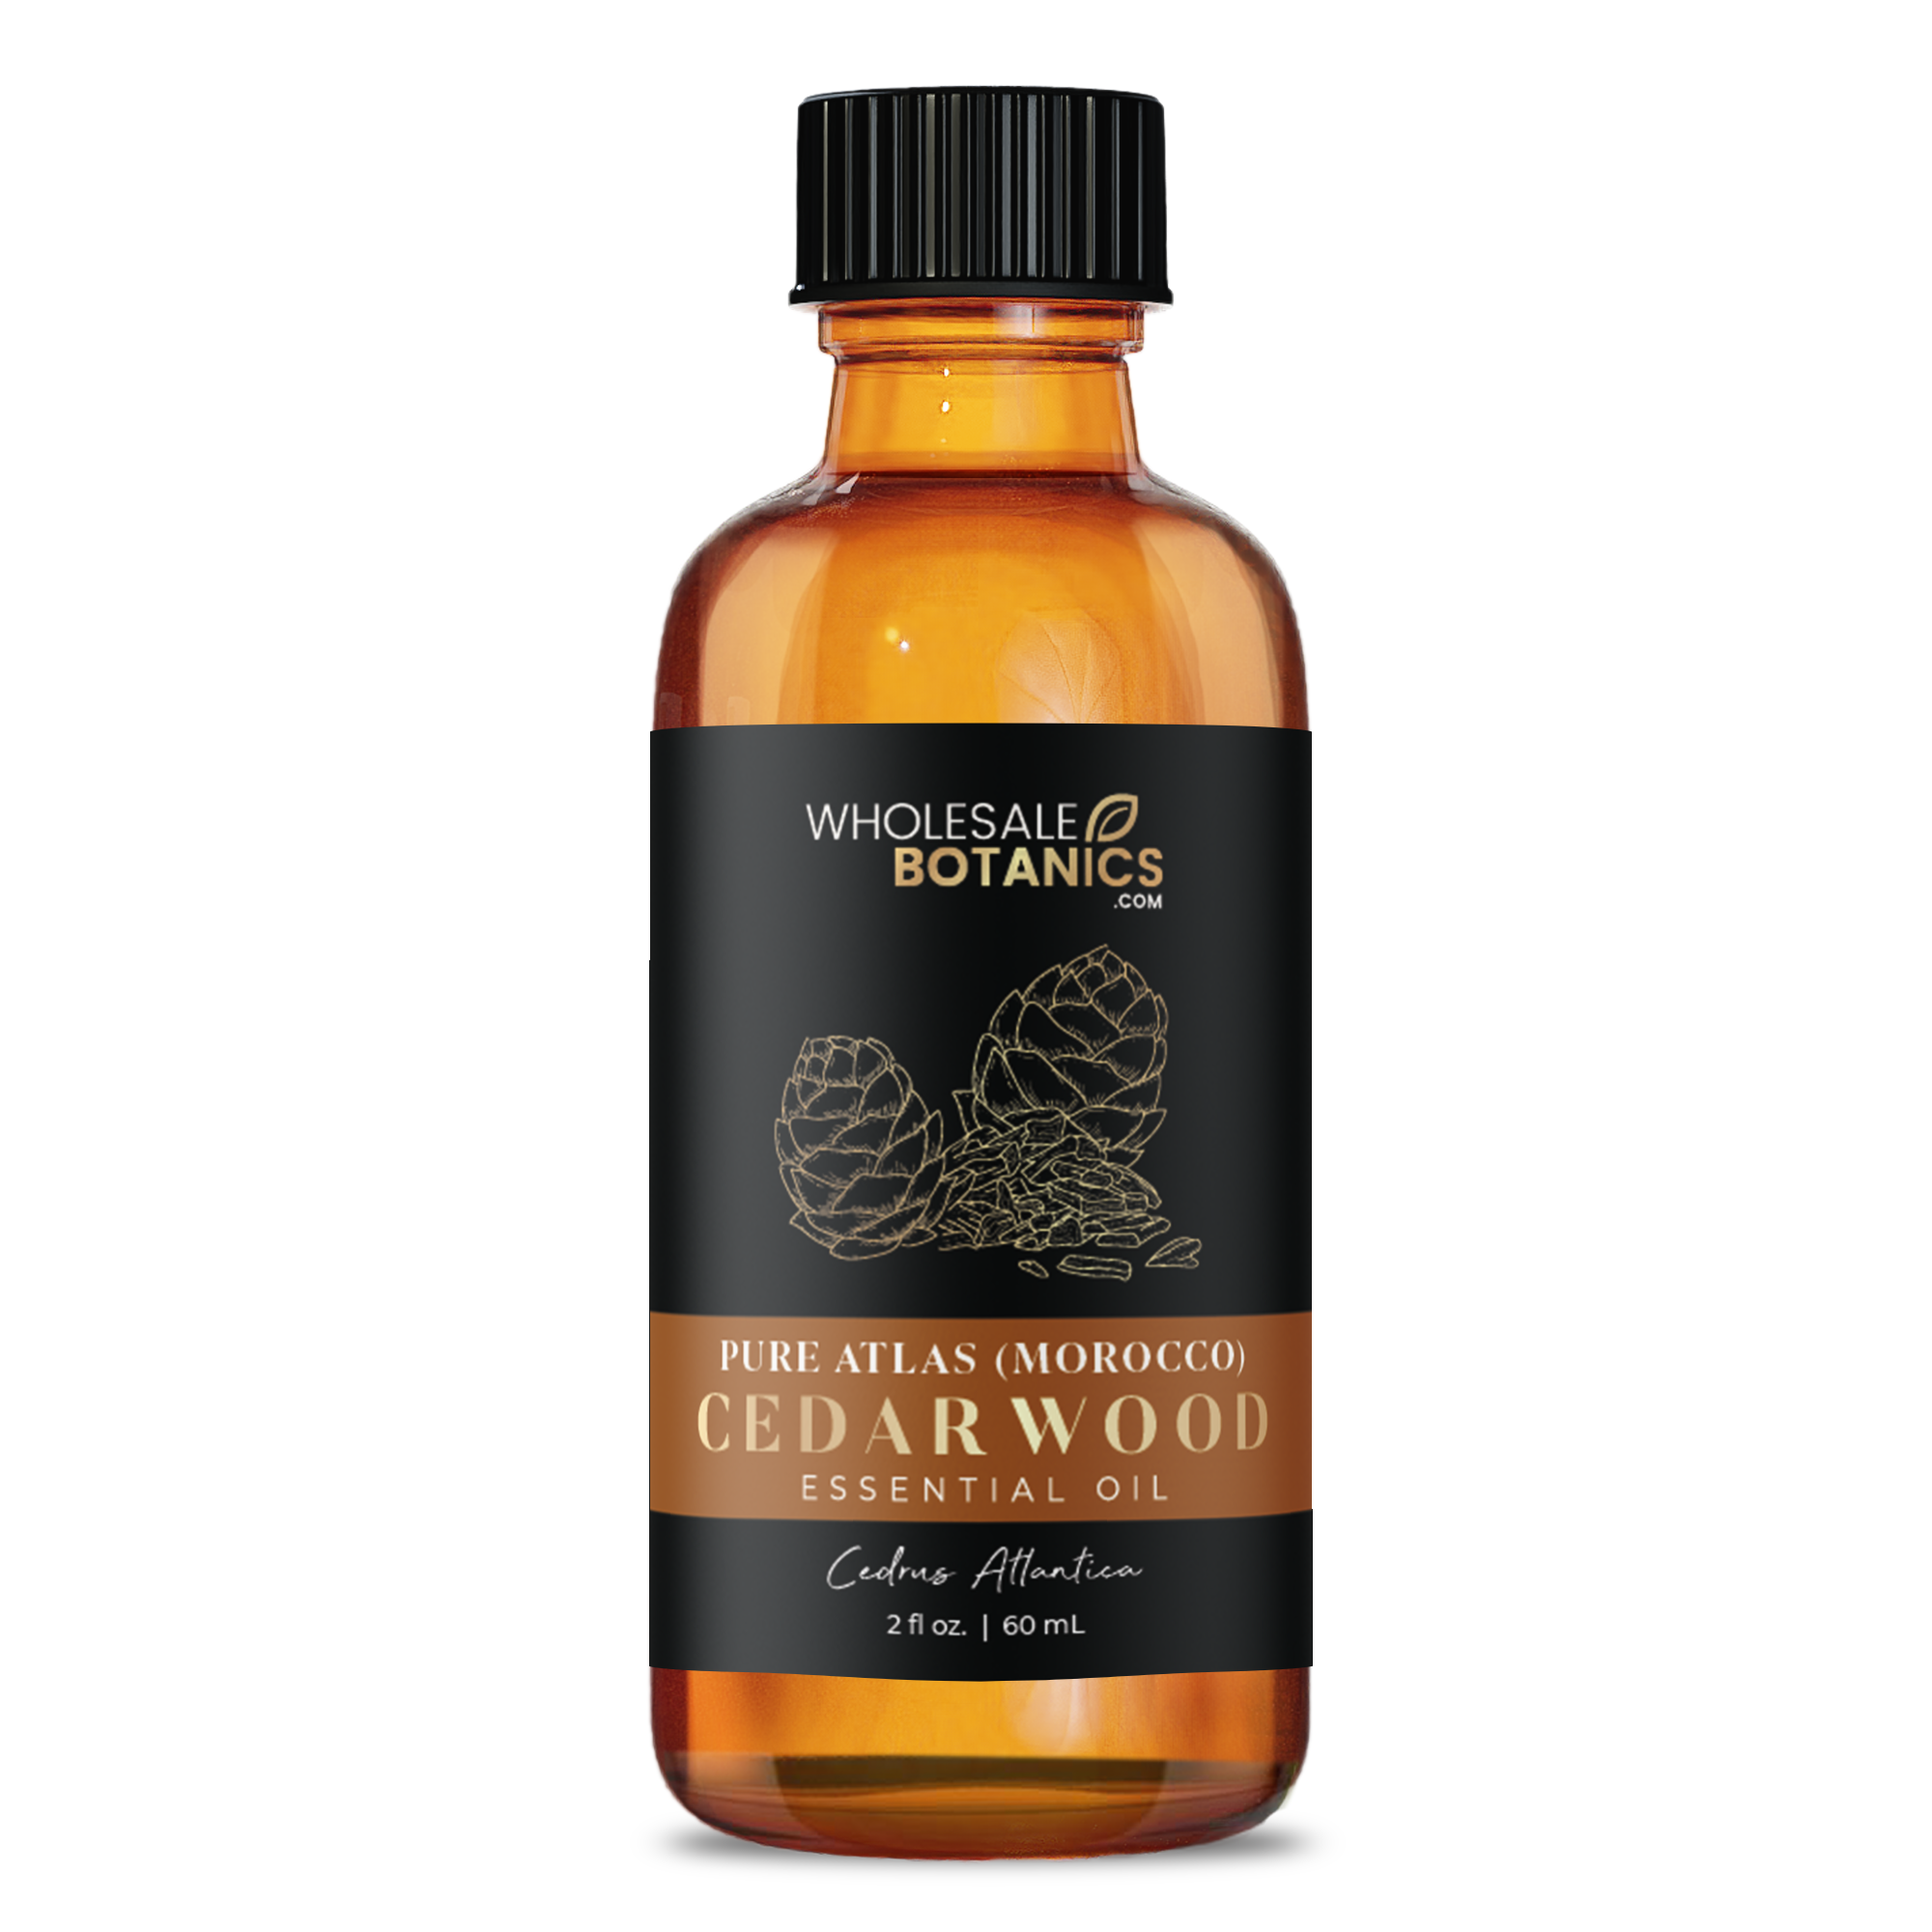 Cedarwood Essential Oil - Purity Atlas Cedarwood (Morocco) - 2 oz